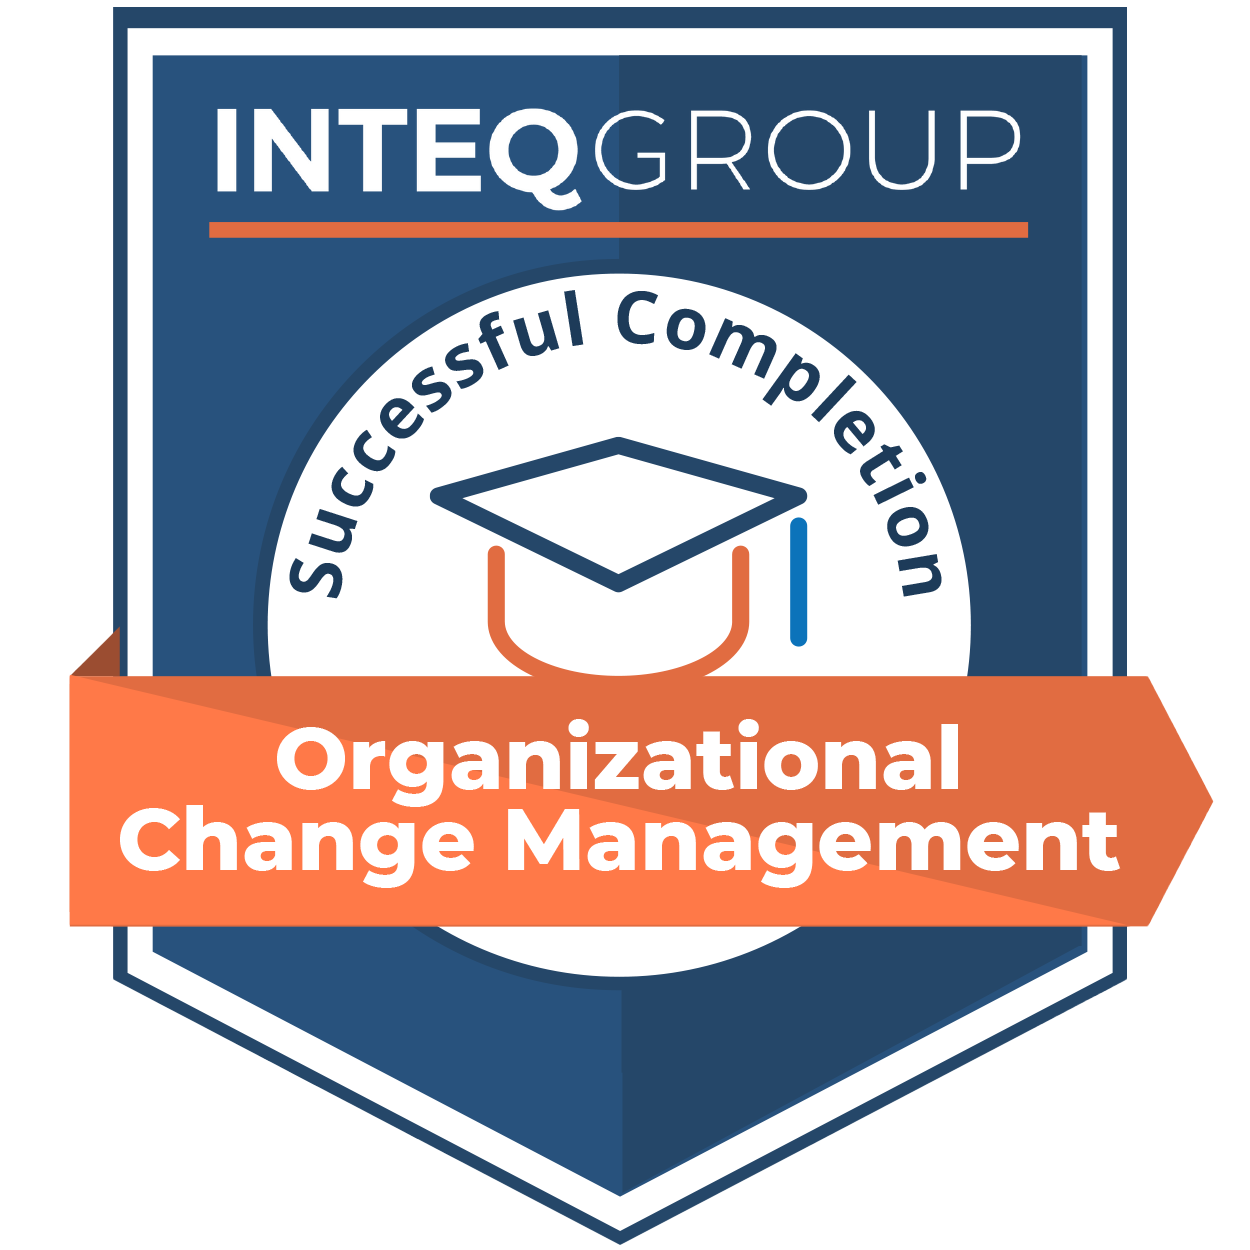 Organization Change Management Badge Final